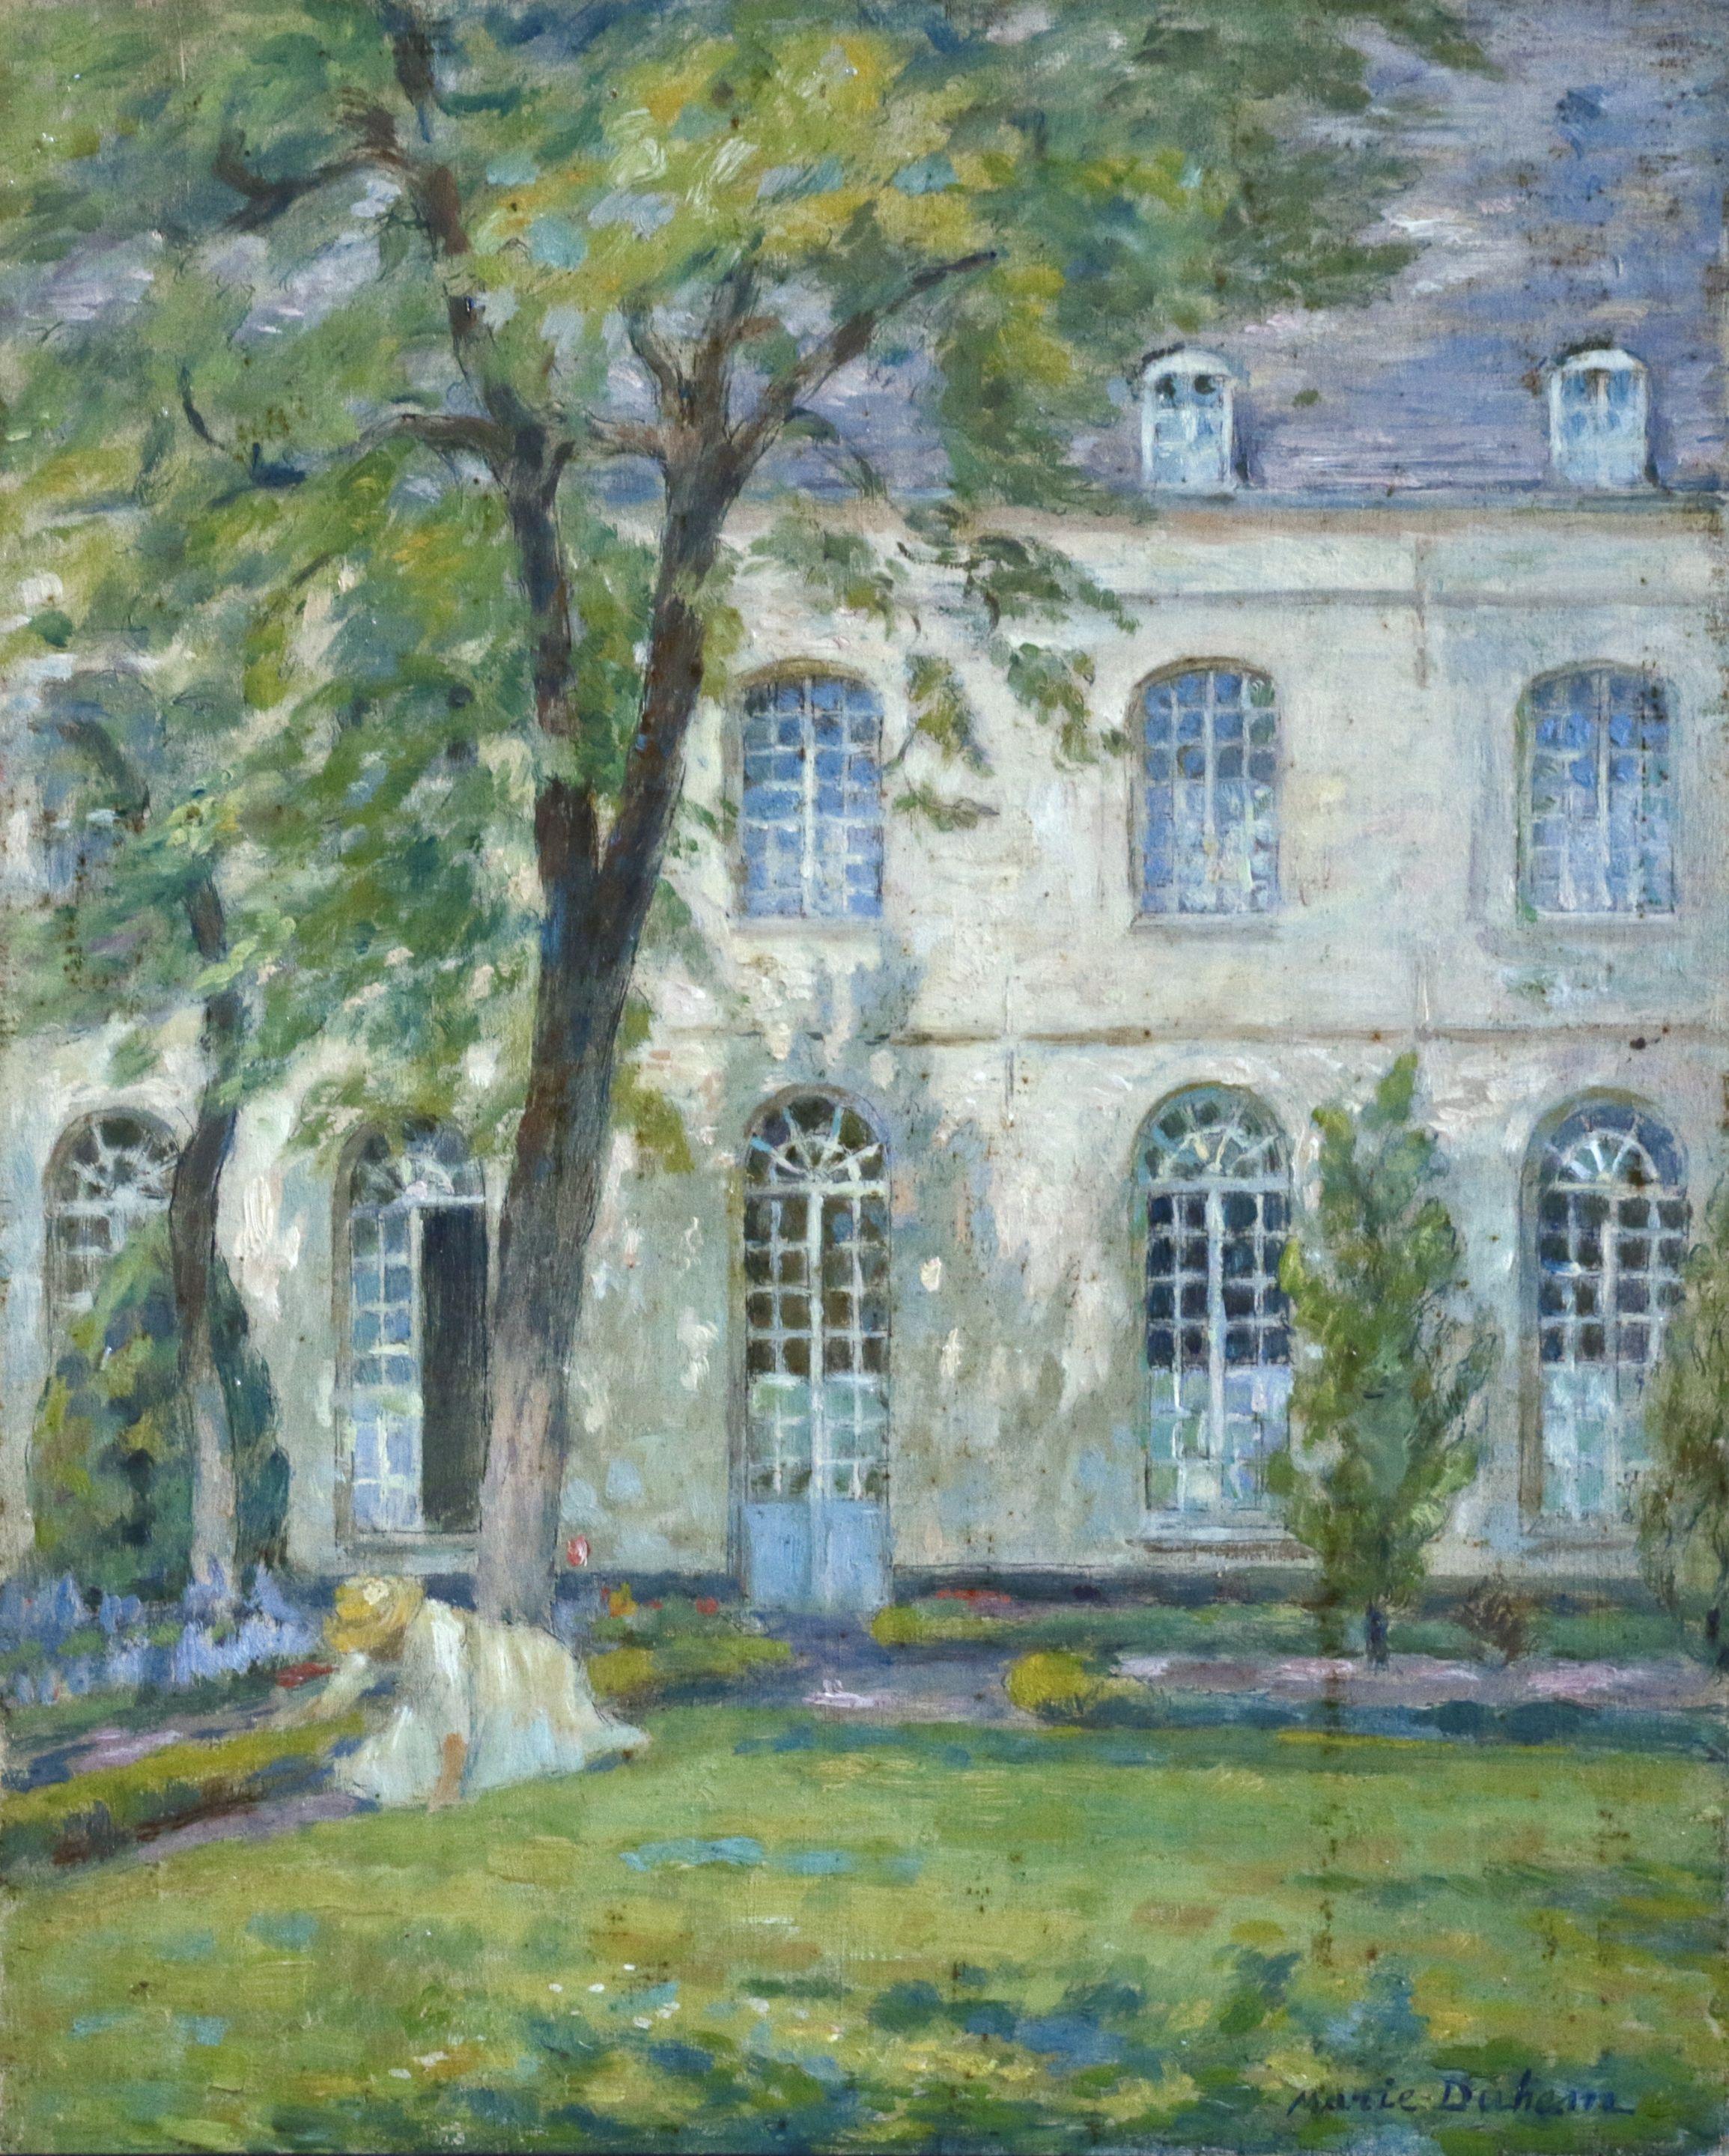 Marie Duhem Landscape Painting - "Tending the Garden" Duhem C.19th French Impressionist Figure in Garden